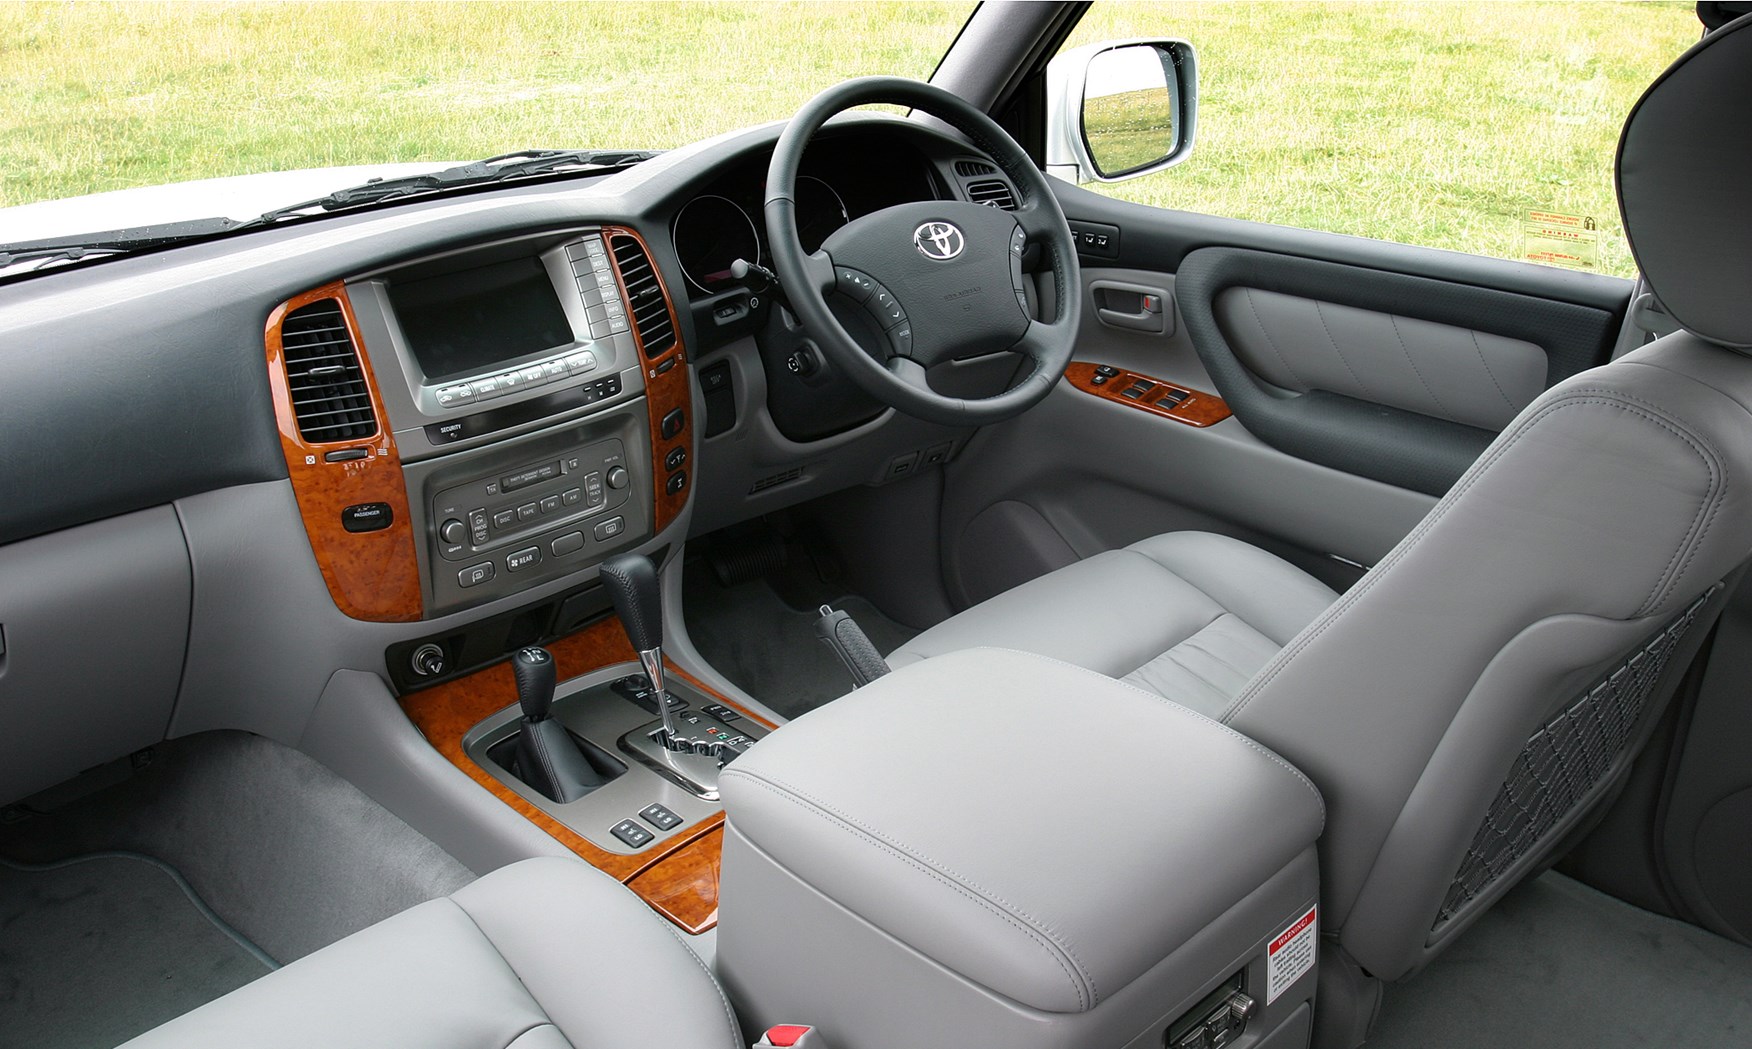 Toyota Land Cruiser Amazon Station Wagon Review (2002 ... toyota land cruiser interior 